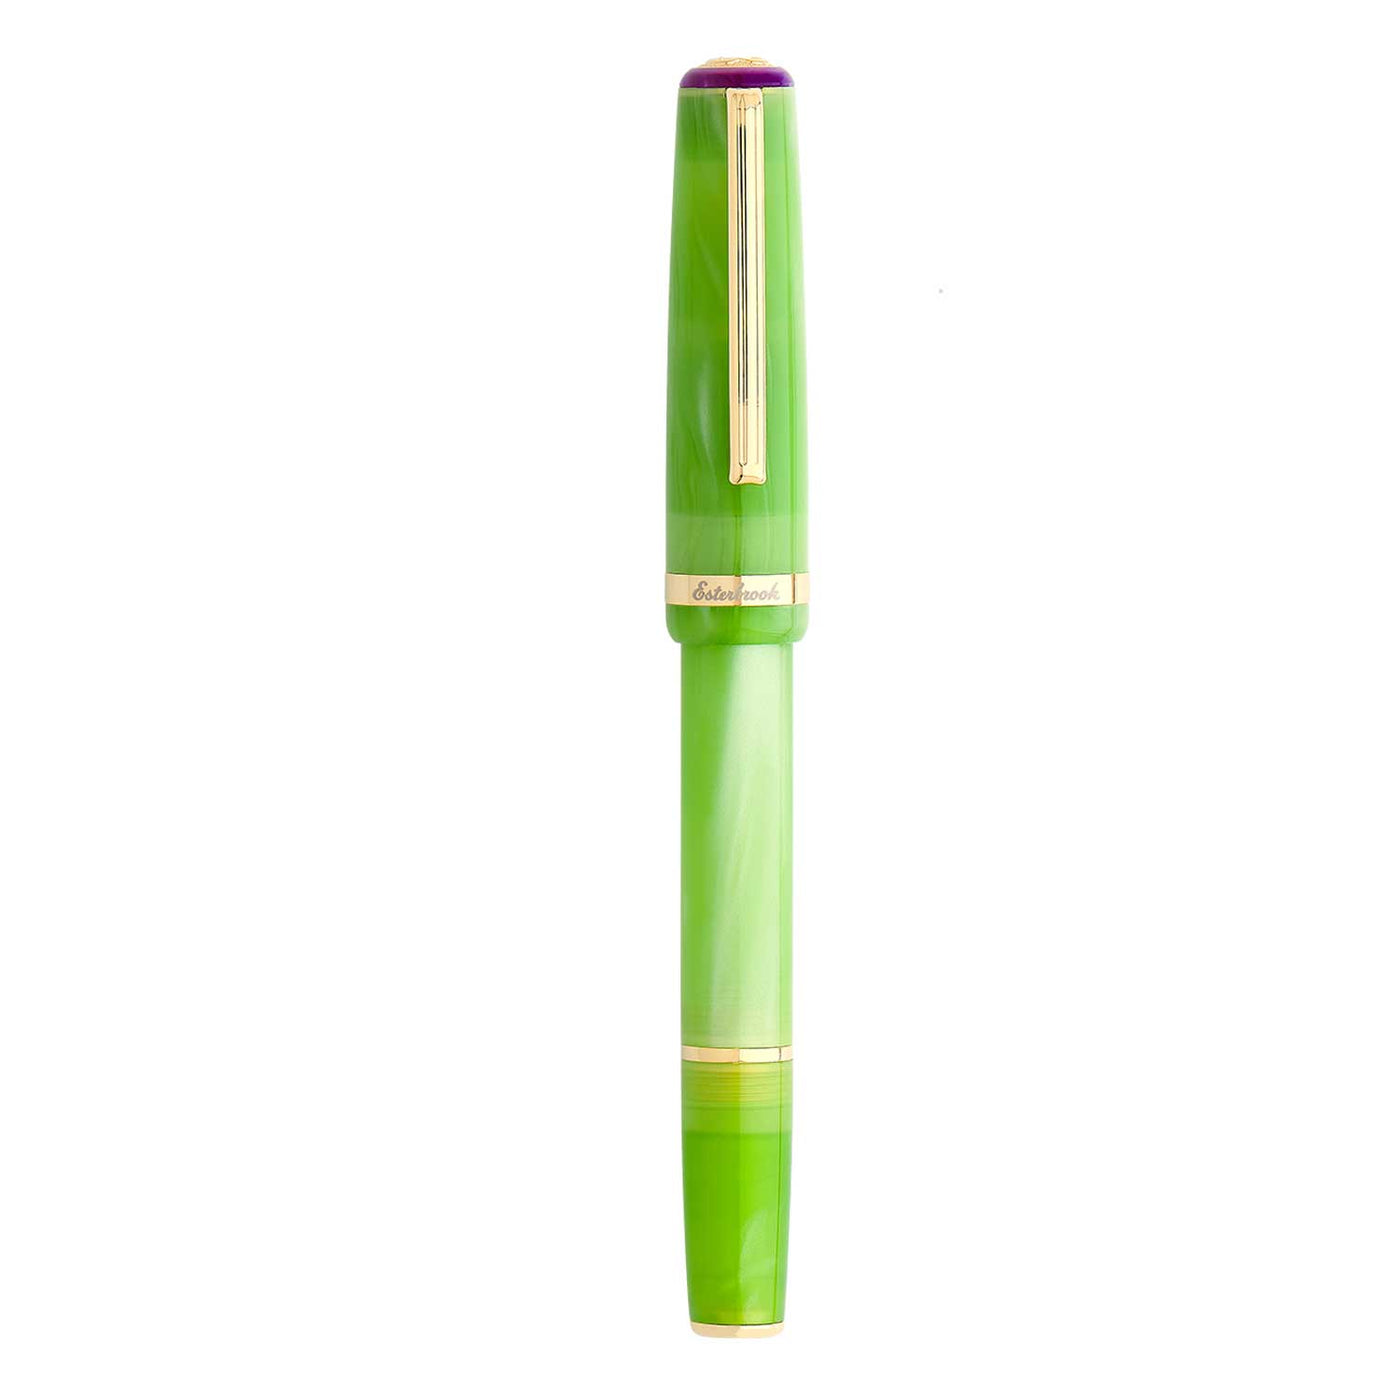 Esterbrook JR Pocket Fountain Pen - Key Lime 8